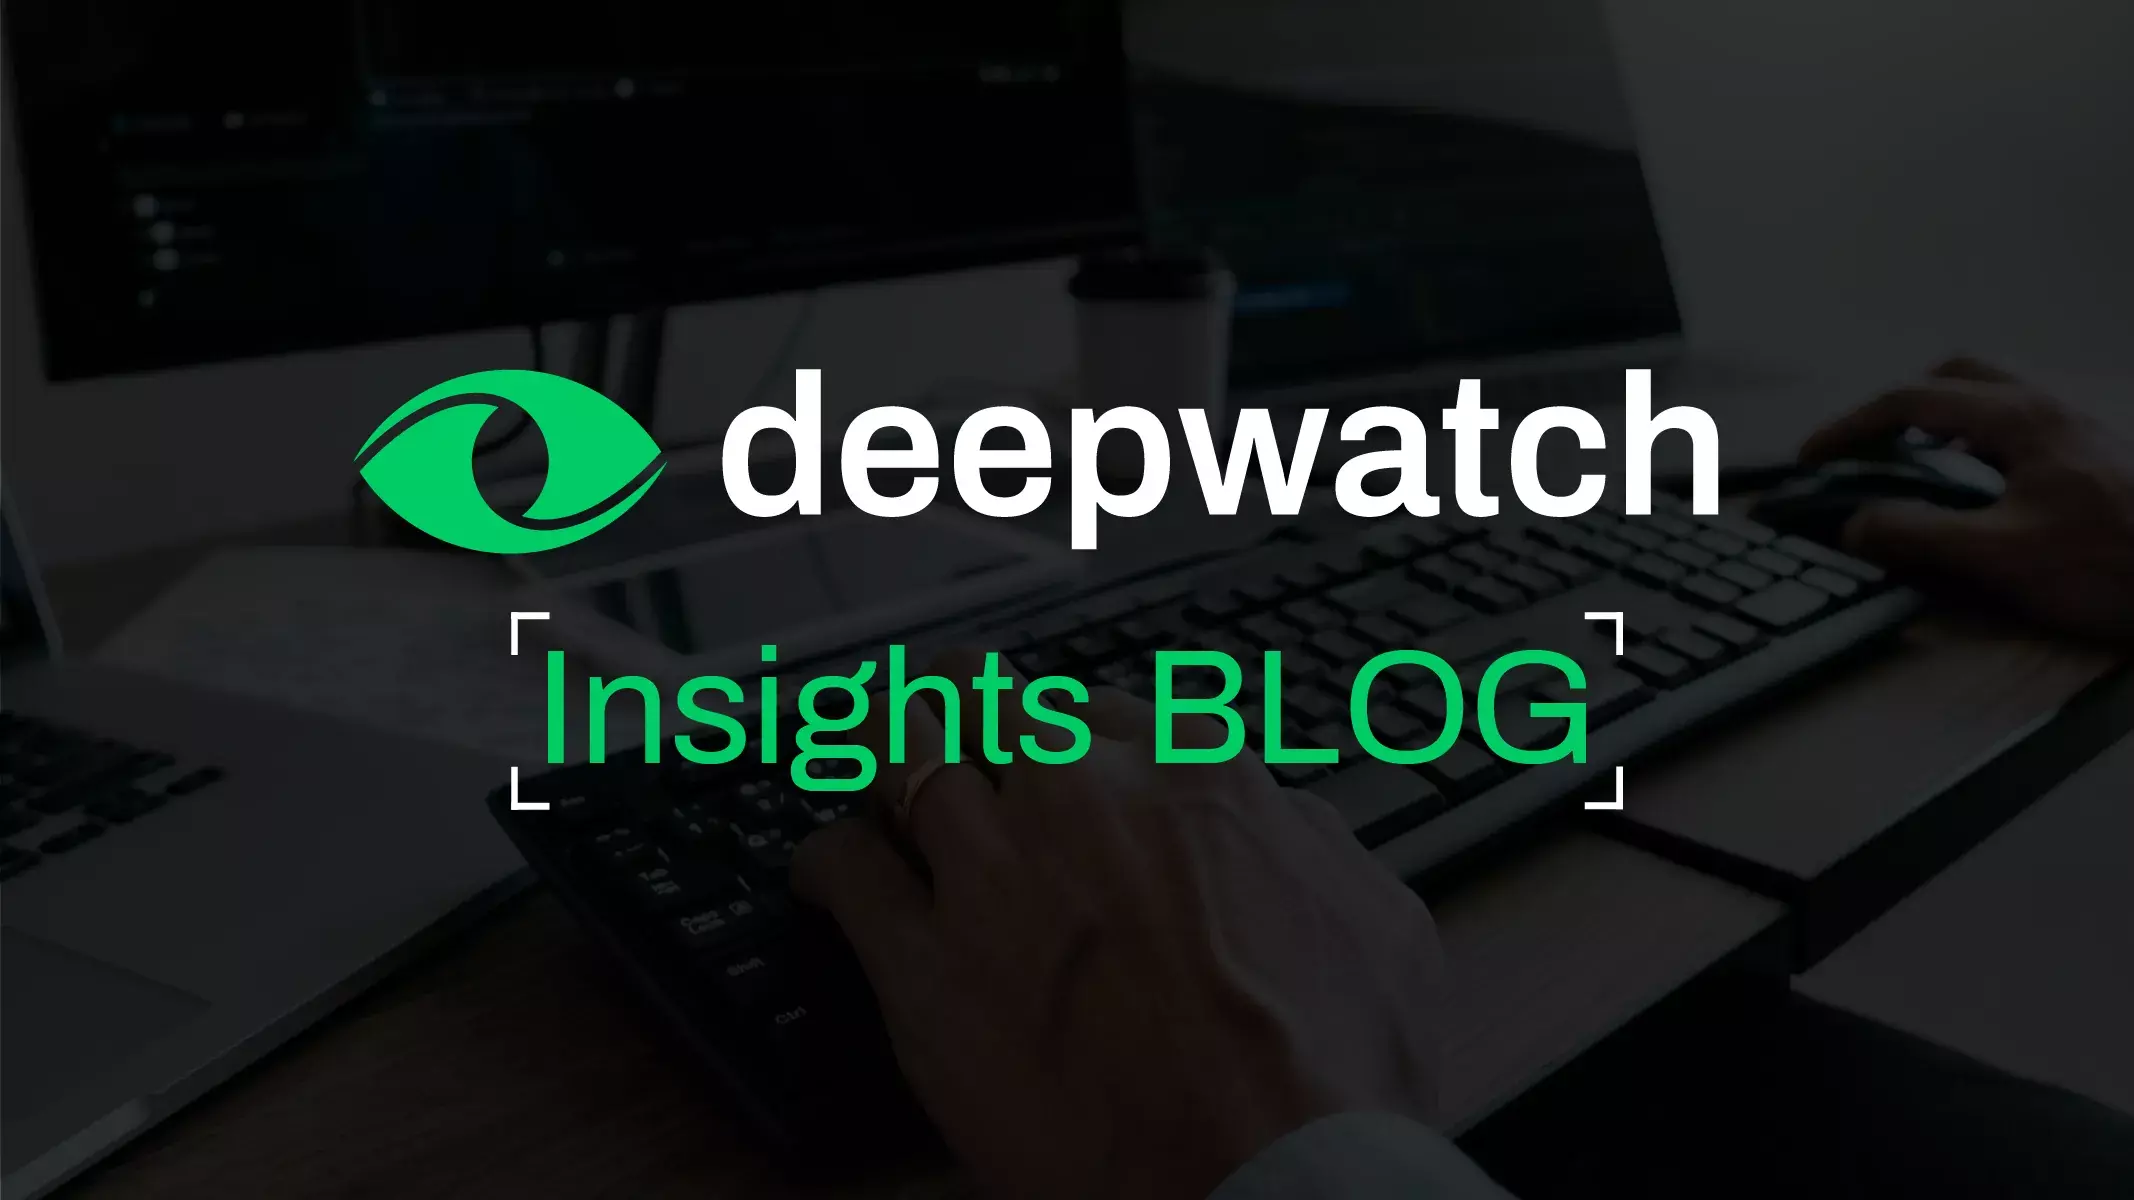 Deepwatch Issights Blog